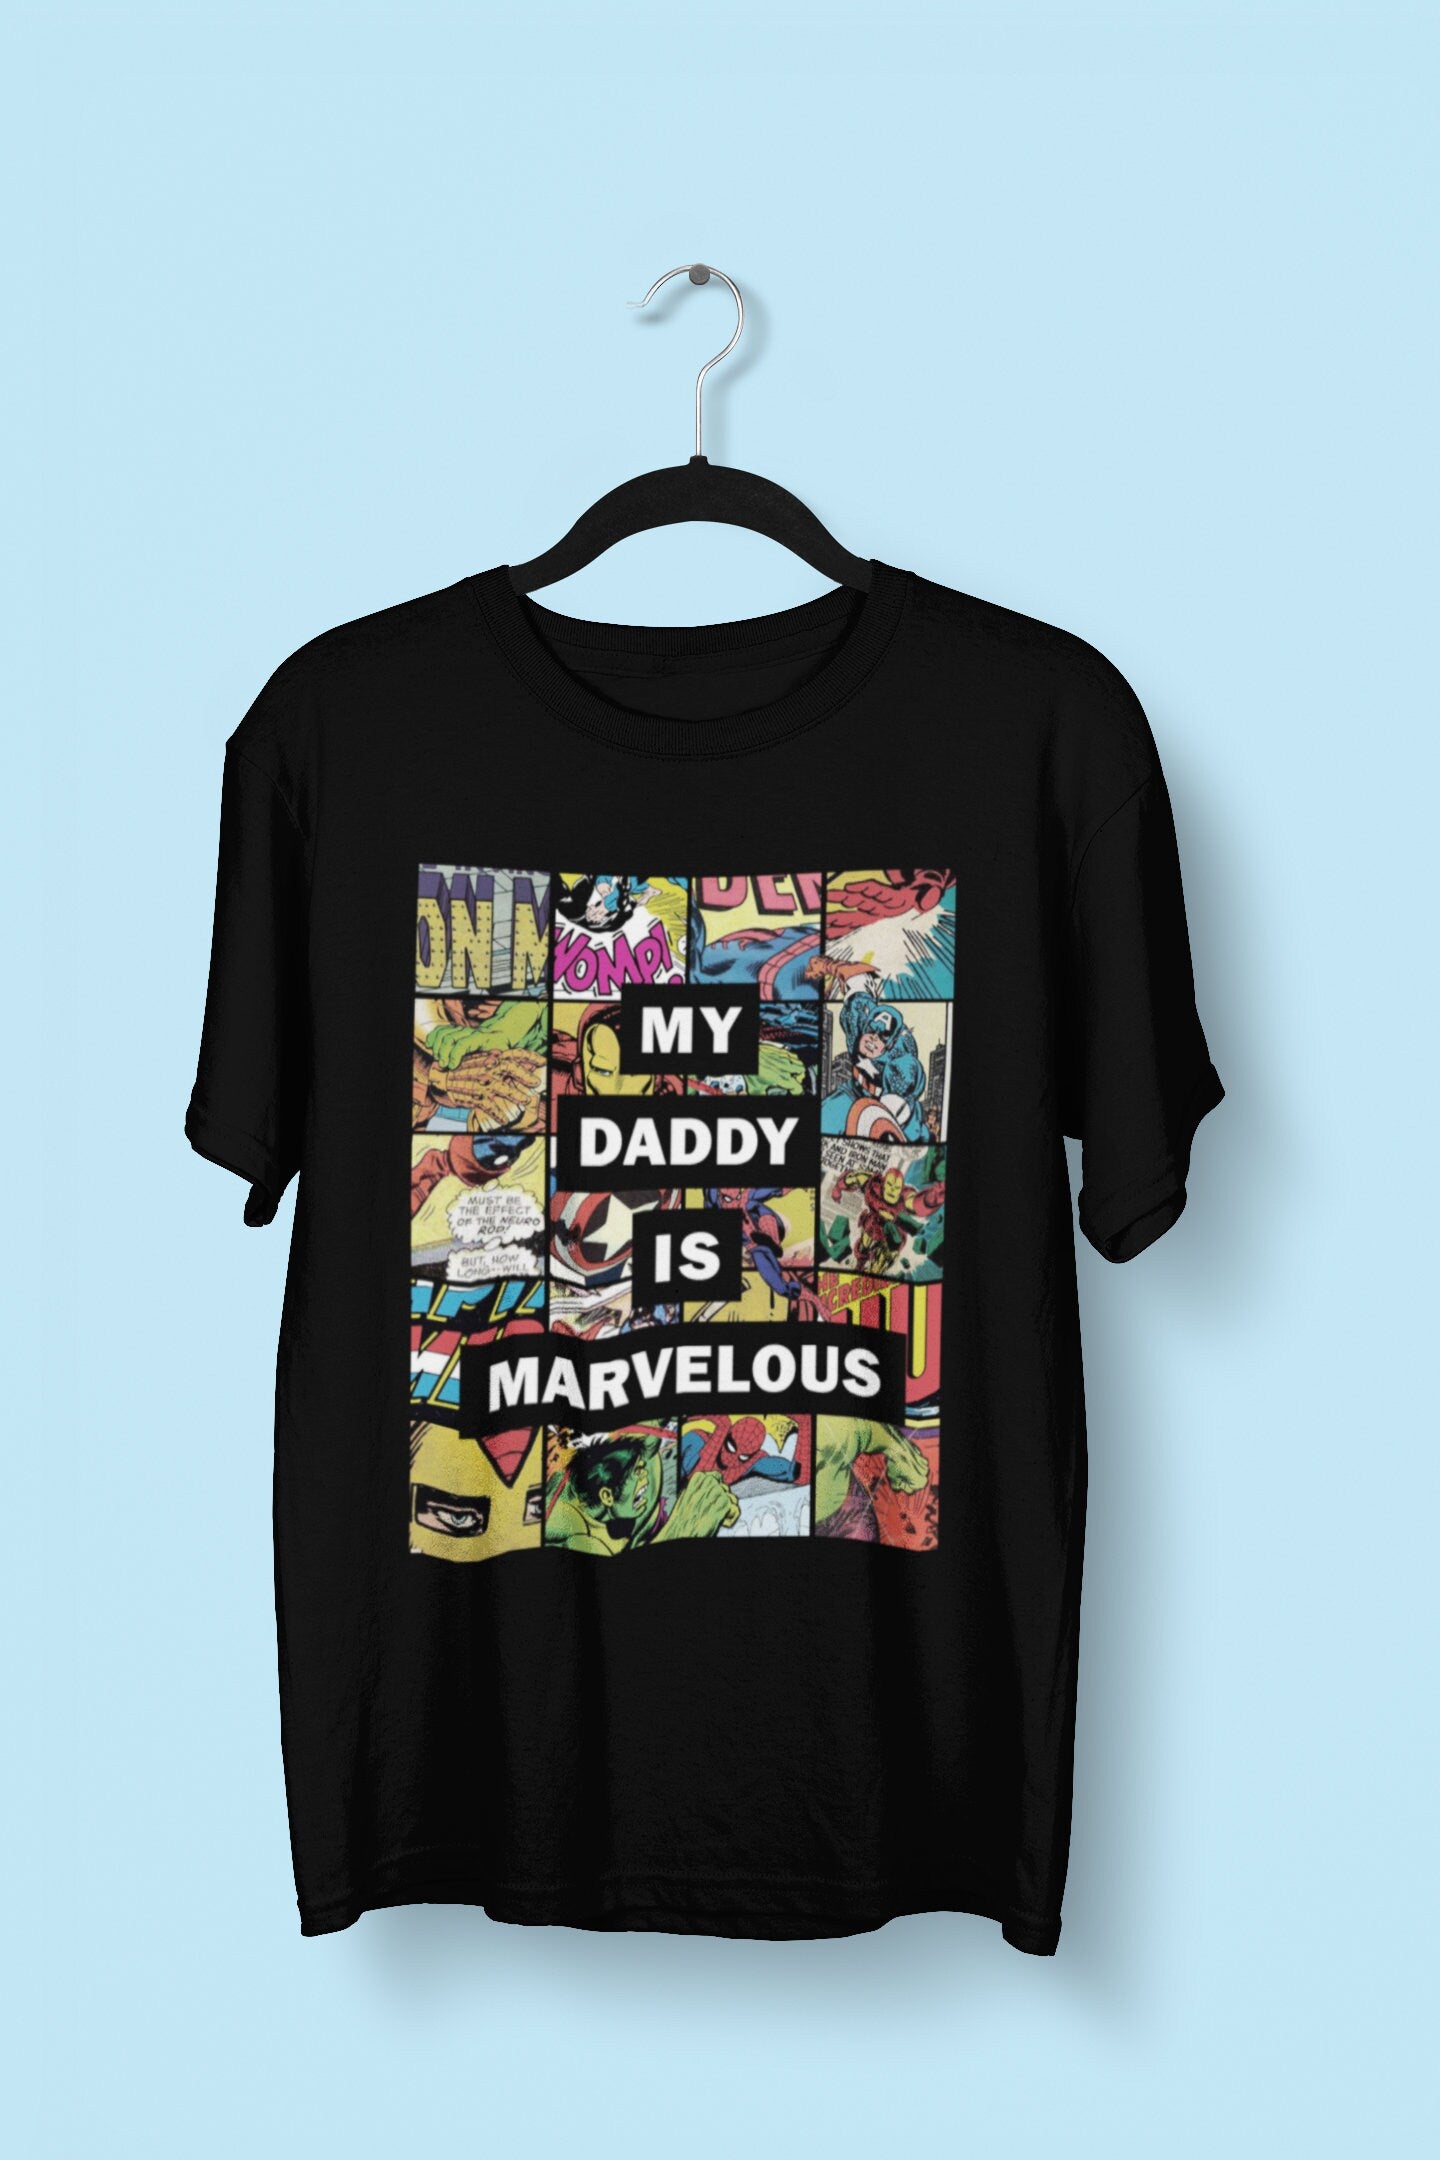 Marvelous Dad Super Hero shirt